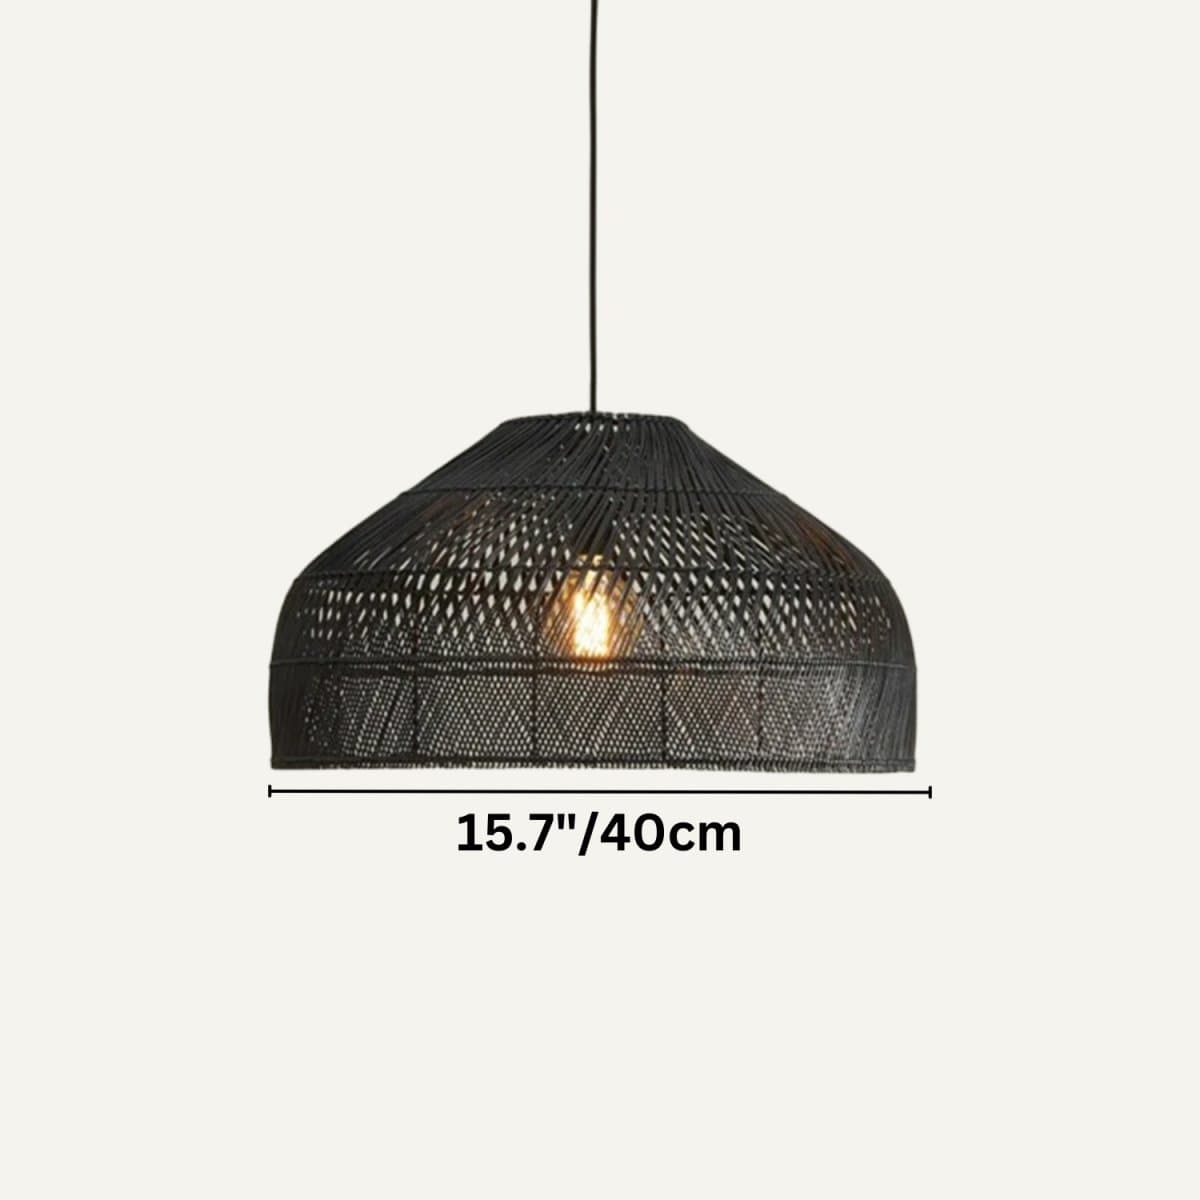 Residence Supply 15.7" / 40cm / Black Darba Pendant Light